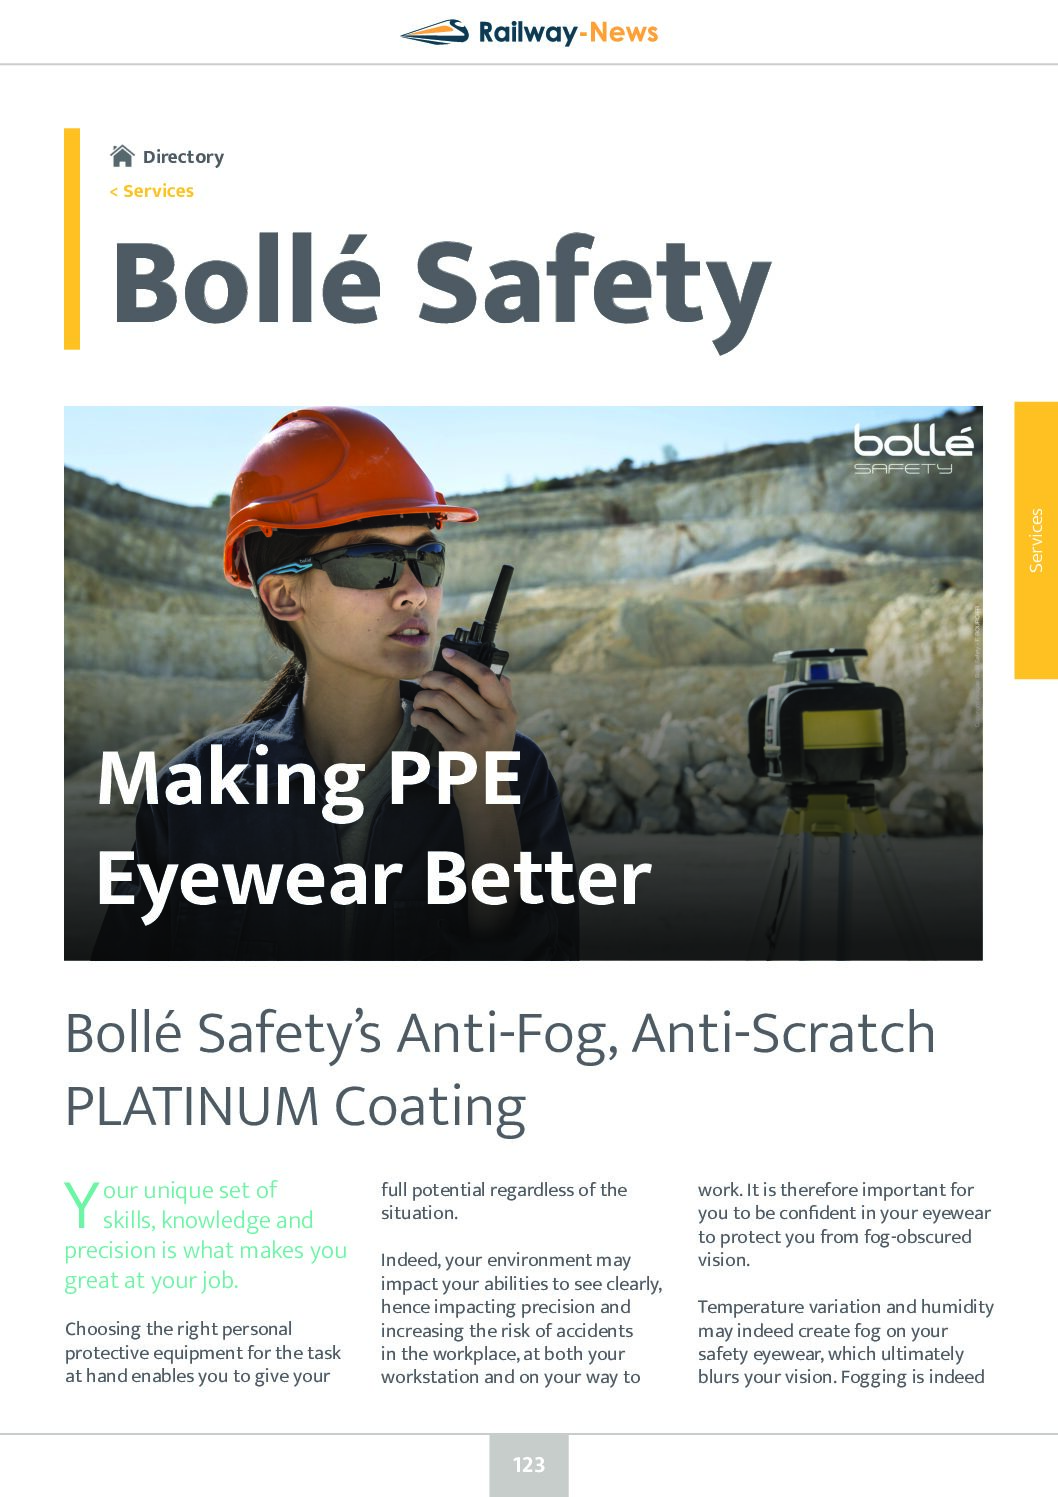 Making PPE Eyewear Better